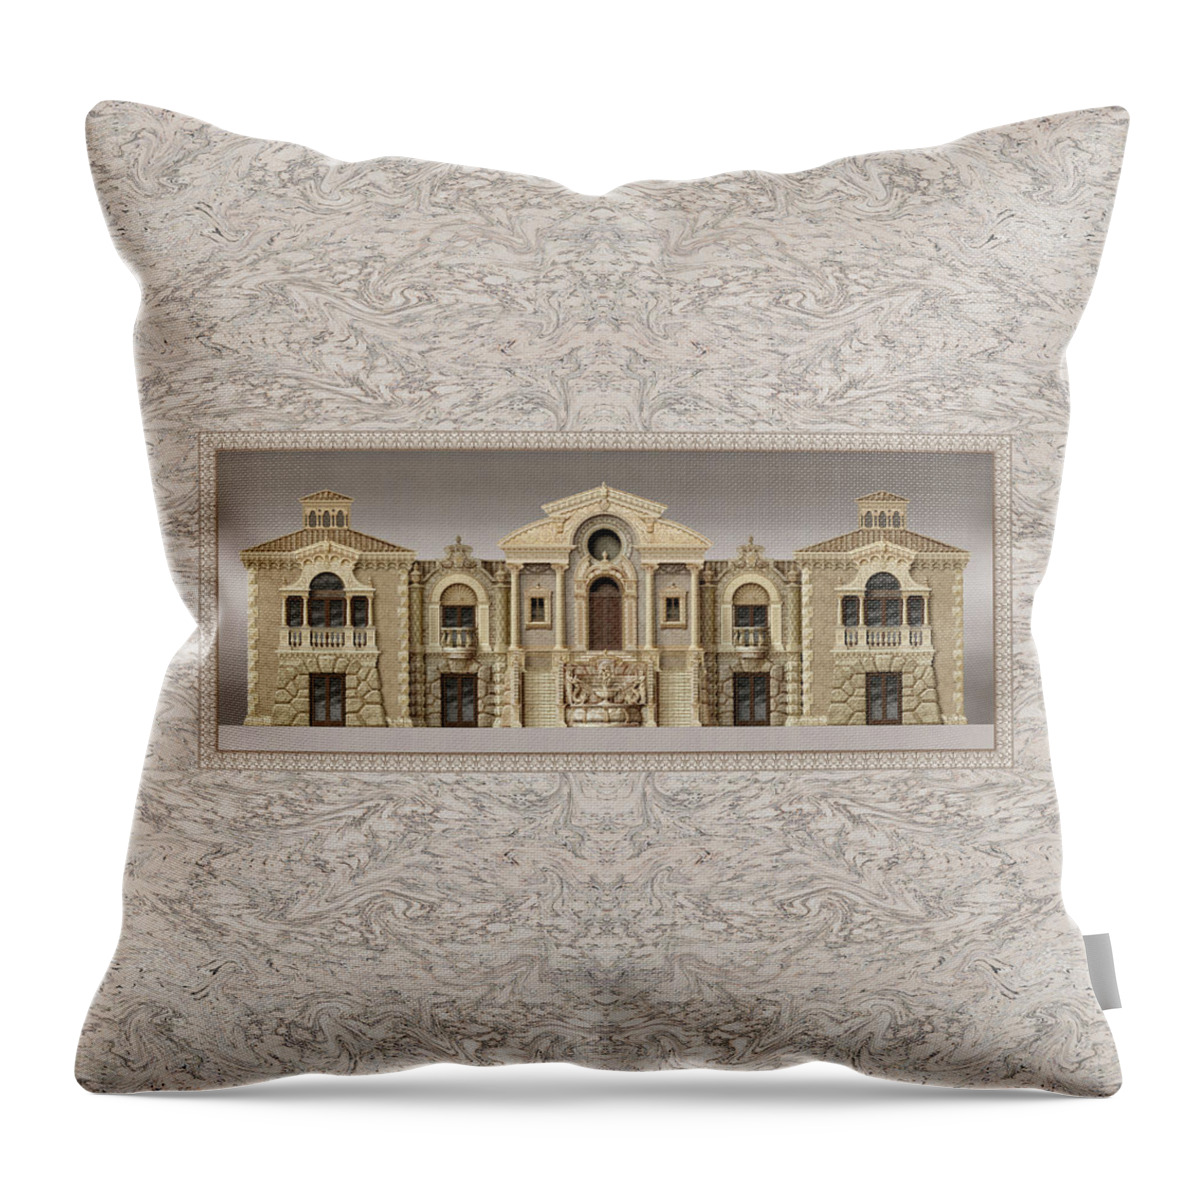 Villa Throw Pillow featuring the drawing Villa Tramontana by Kurt Wenner